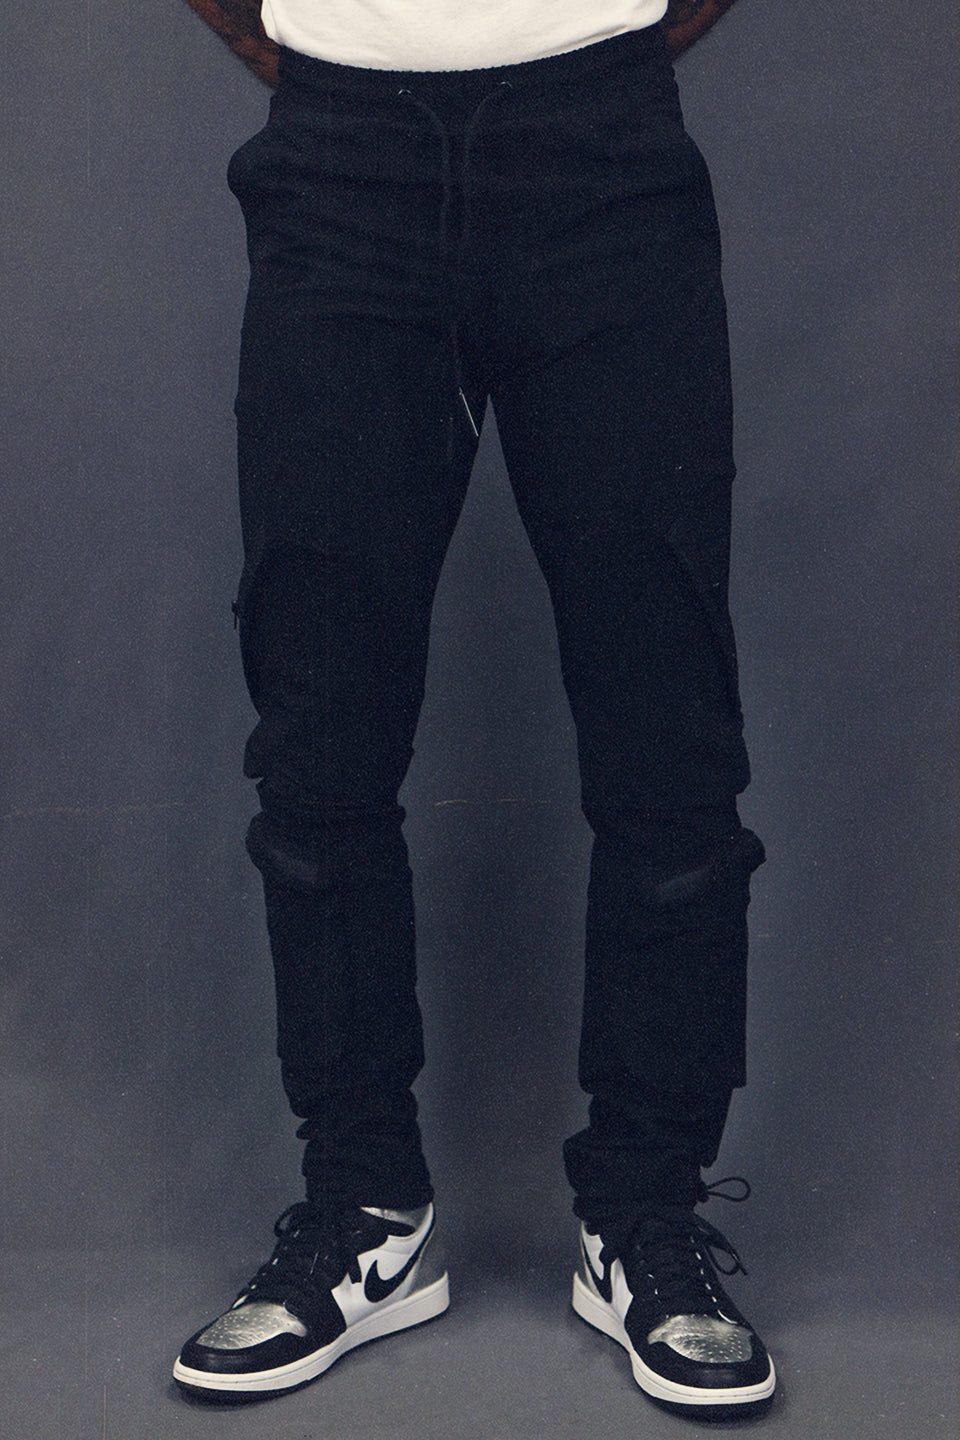 Men's Tactical Nylon Track Pants Street Sweatpants Utility Joggers with Zipper Pockets | Black front view